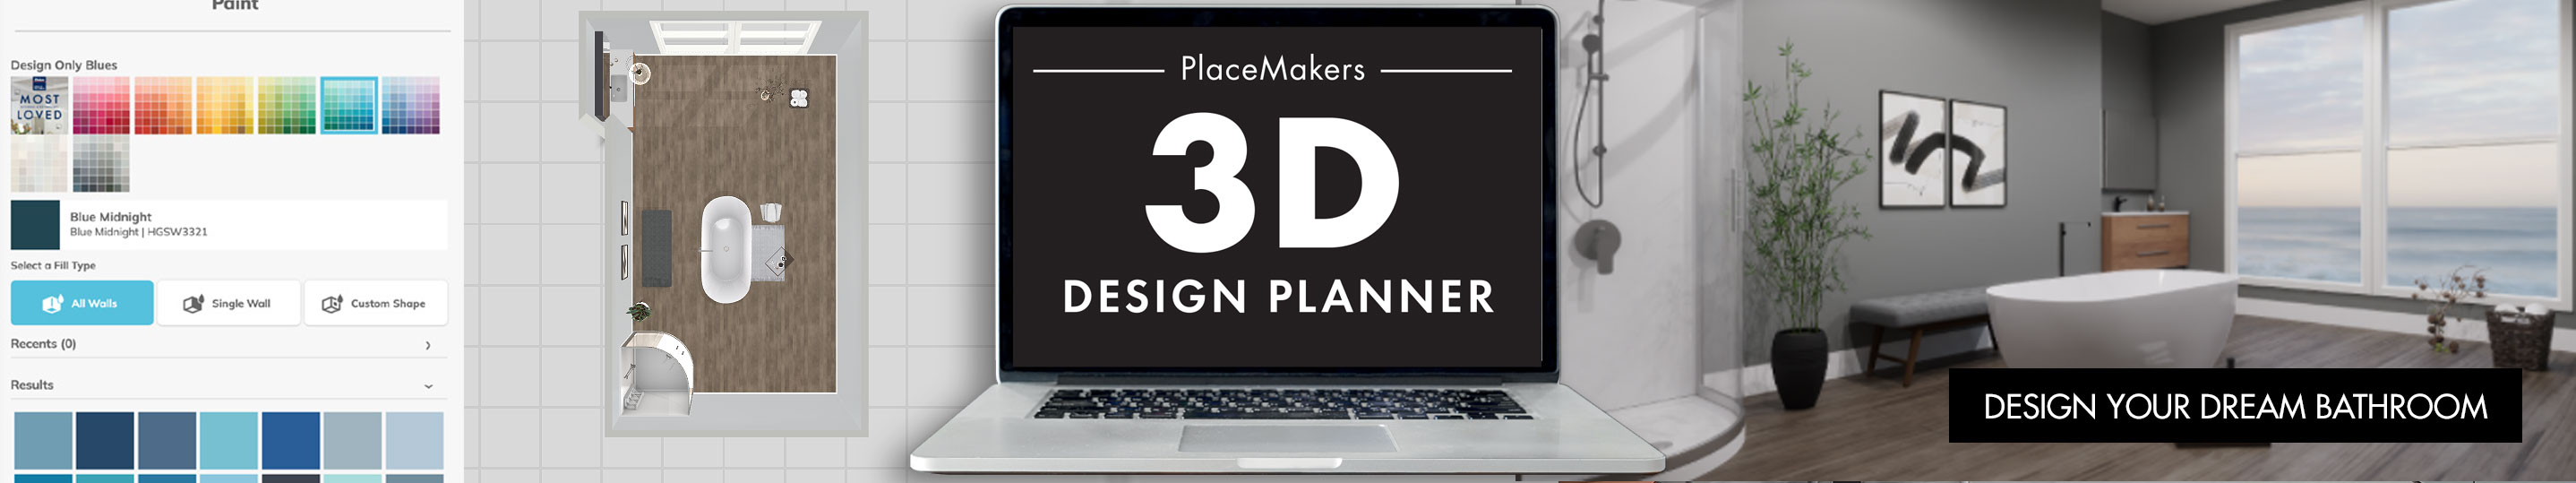 3D Design Planner - Bathroom